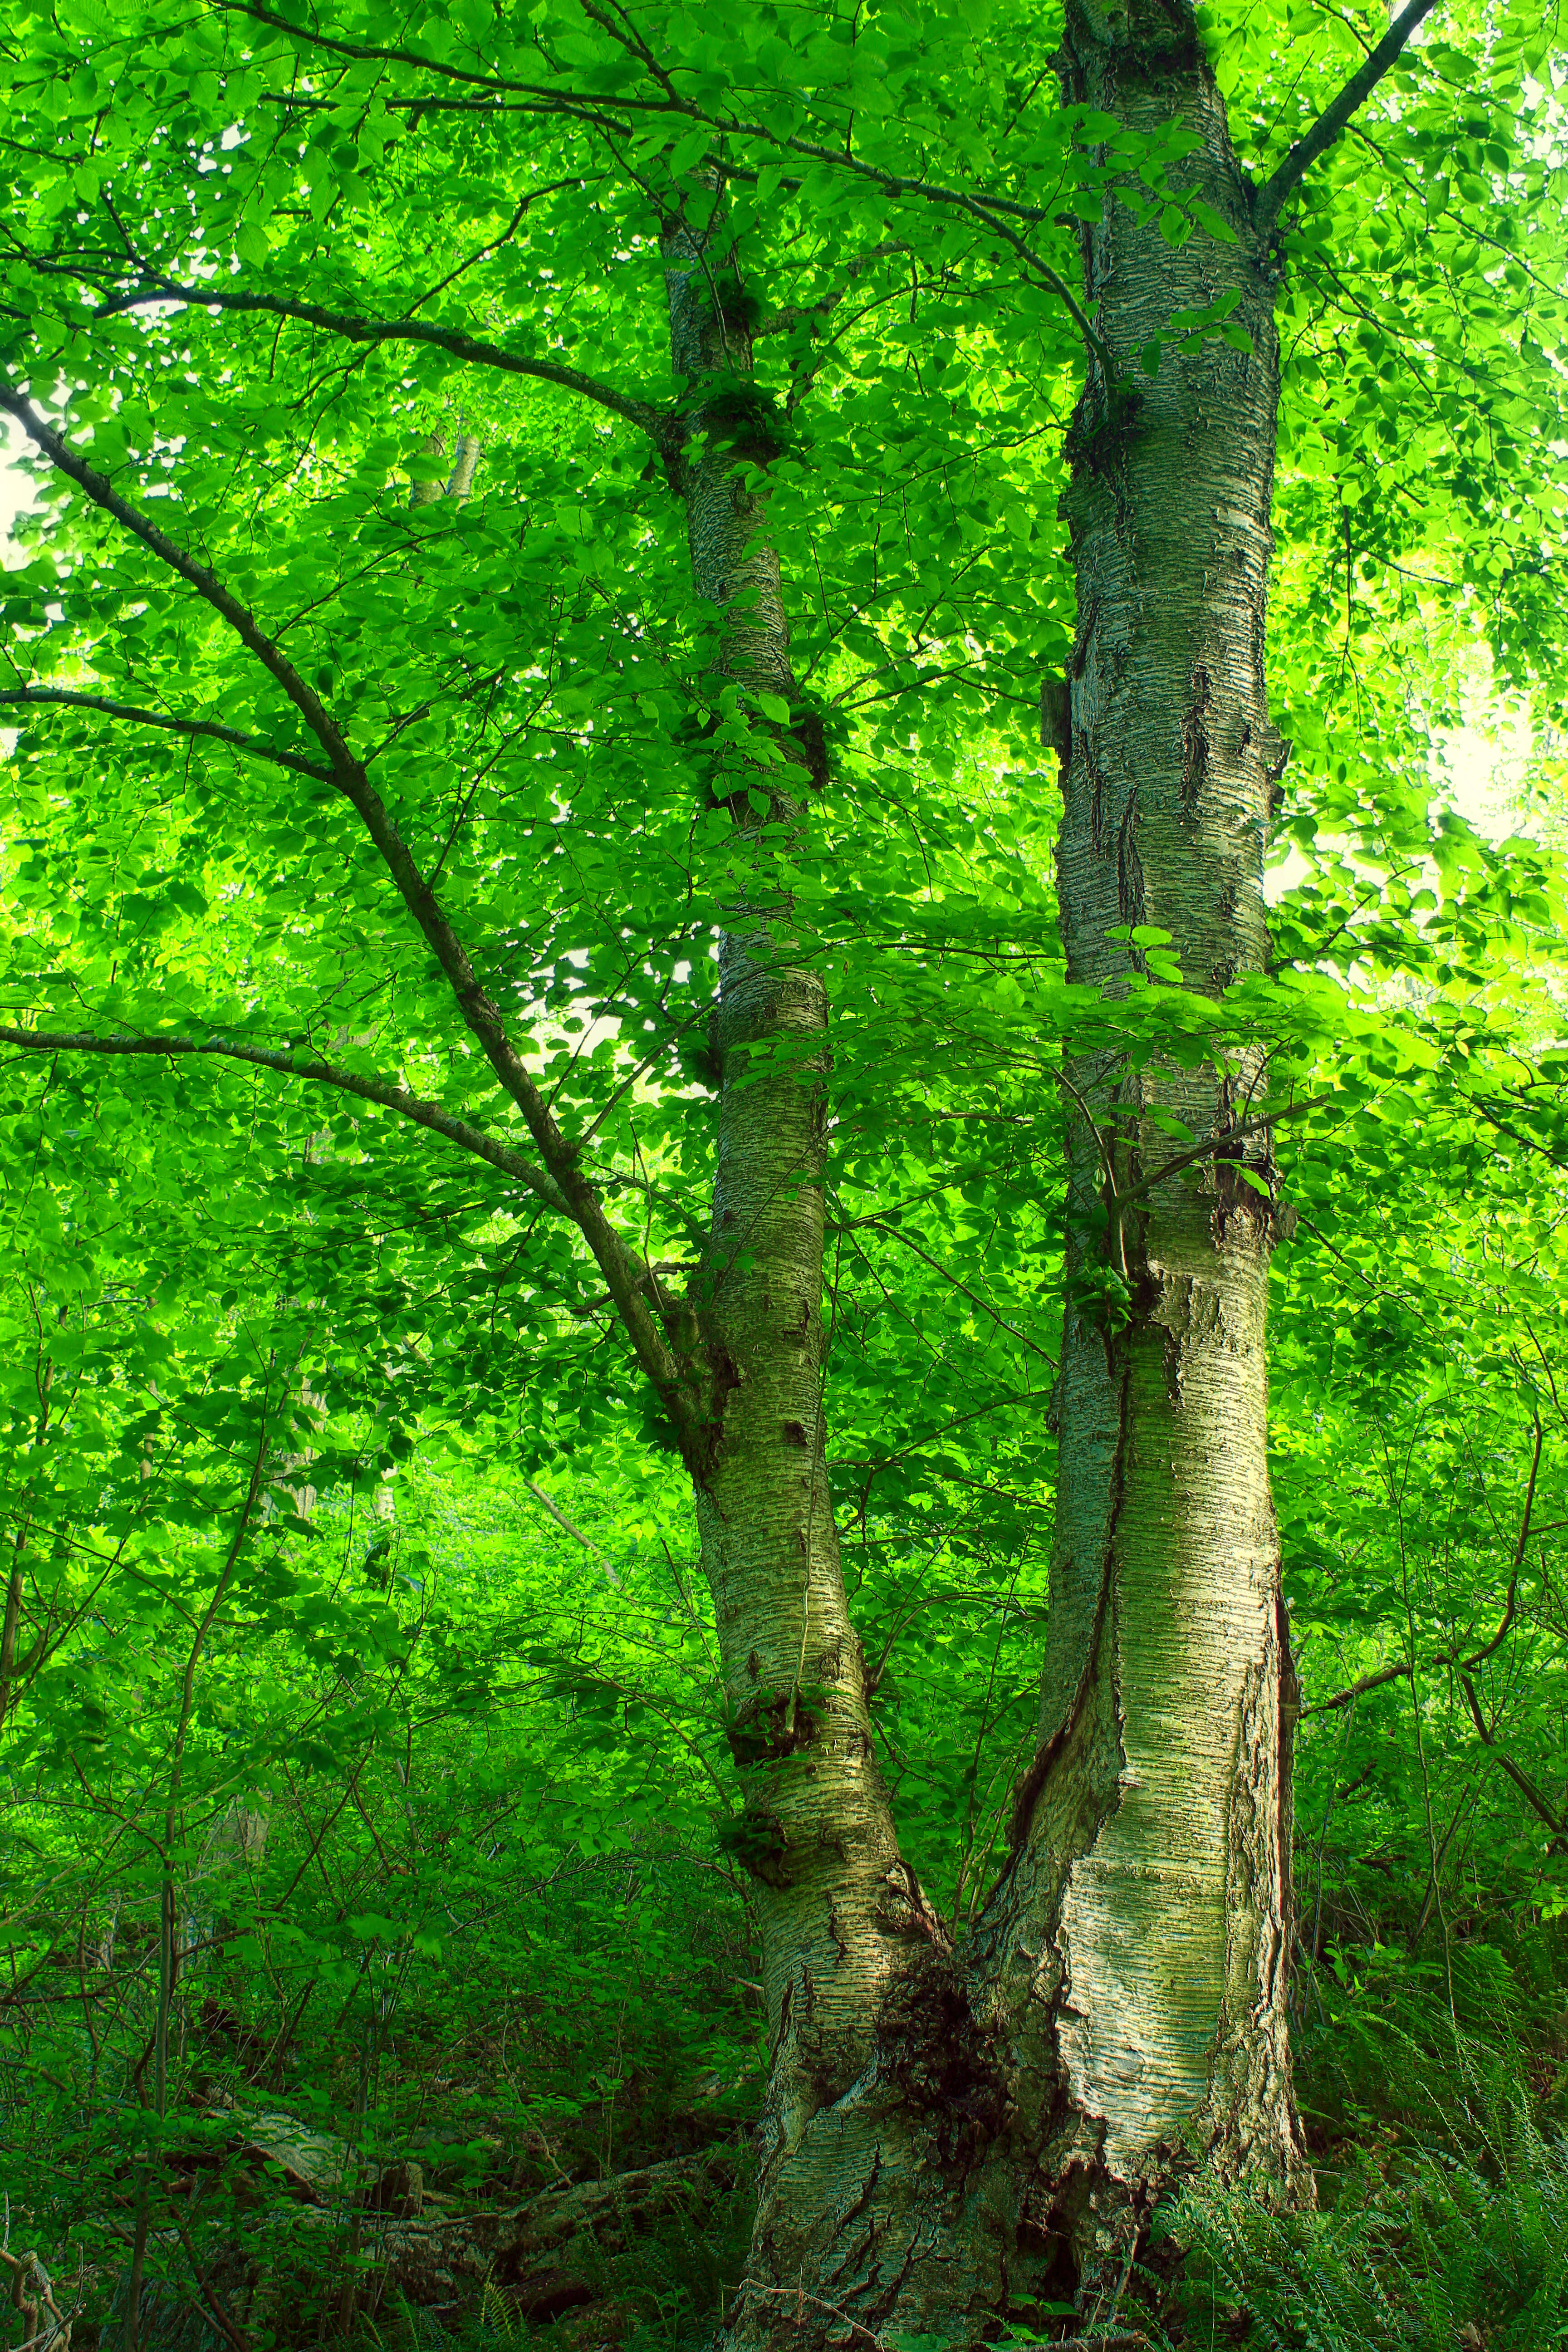 Image of Gray birch